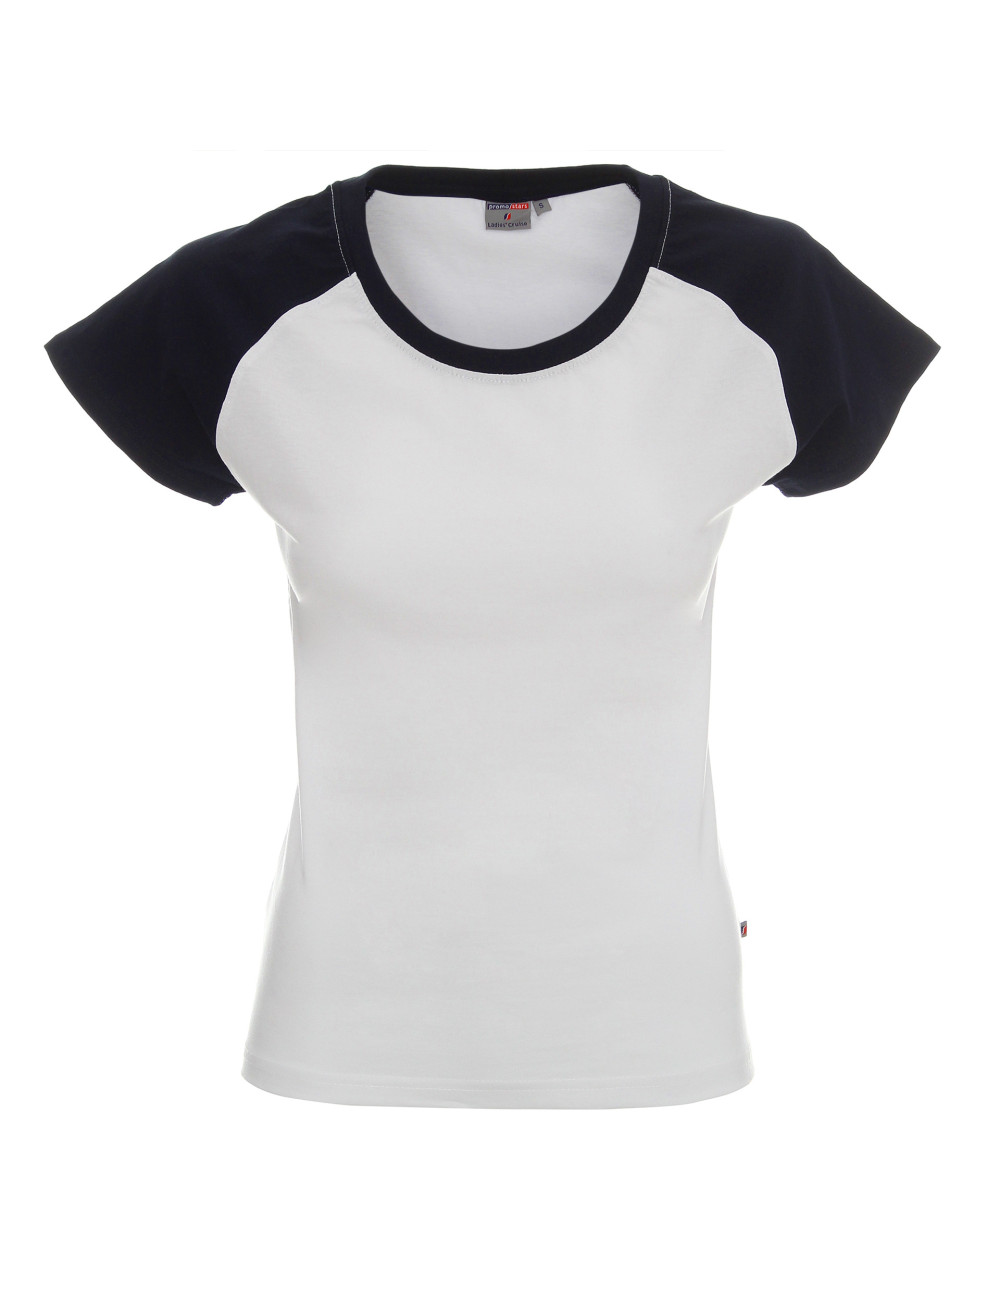 Ladies' cruise koszulka damska biały/granatowy Promostars